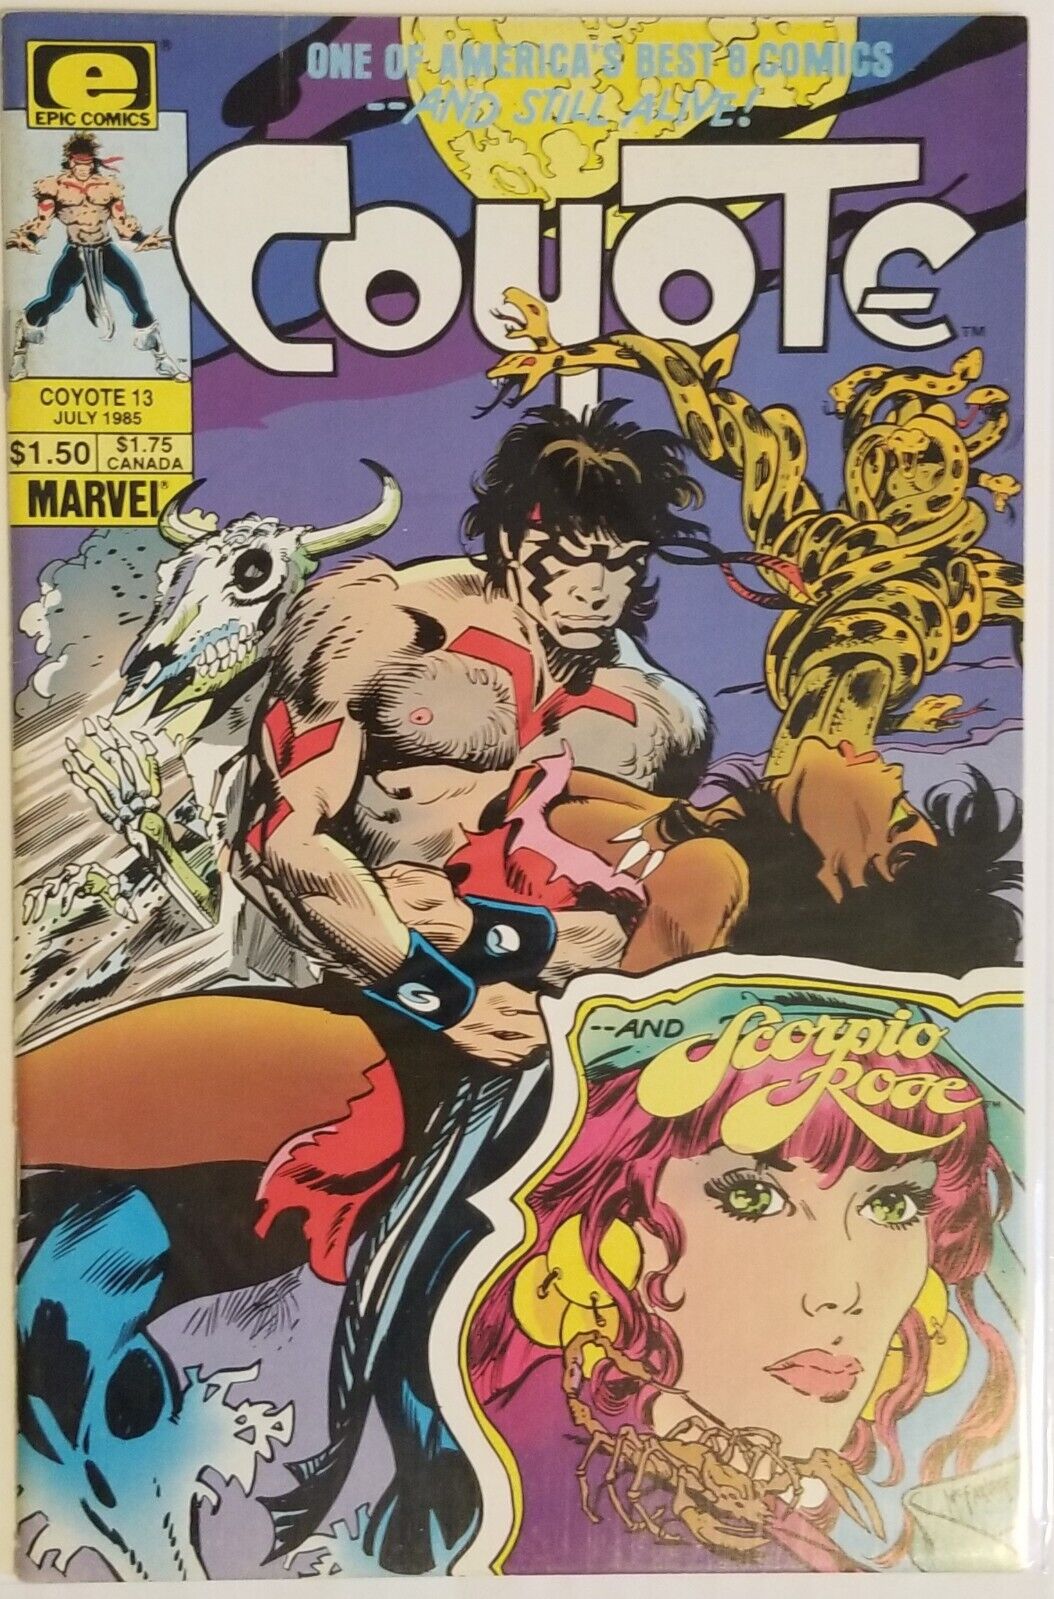 Coyote #11 #13 1st McFarlane Art Cover Marvel Epic Comics Key Venom 300 Rare HTF